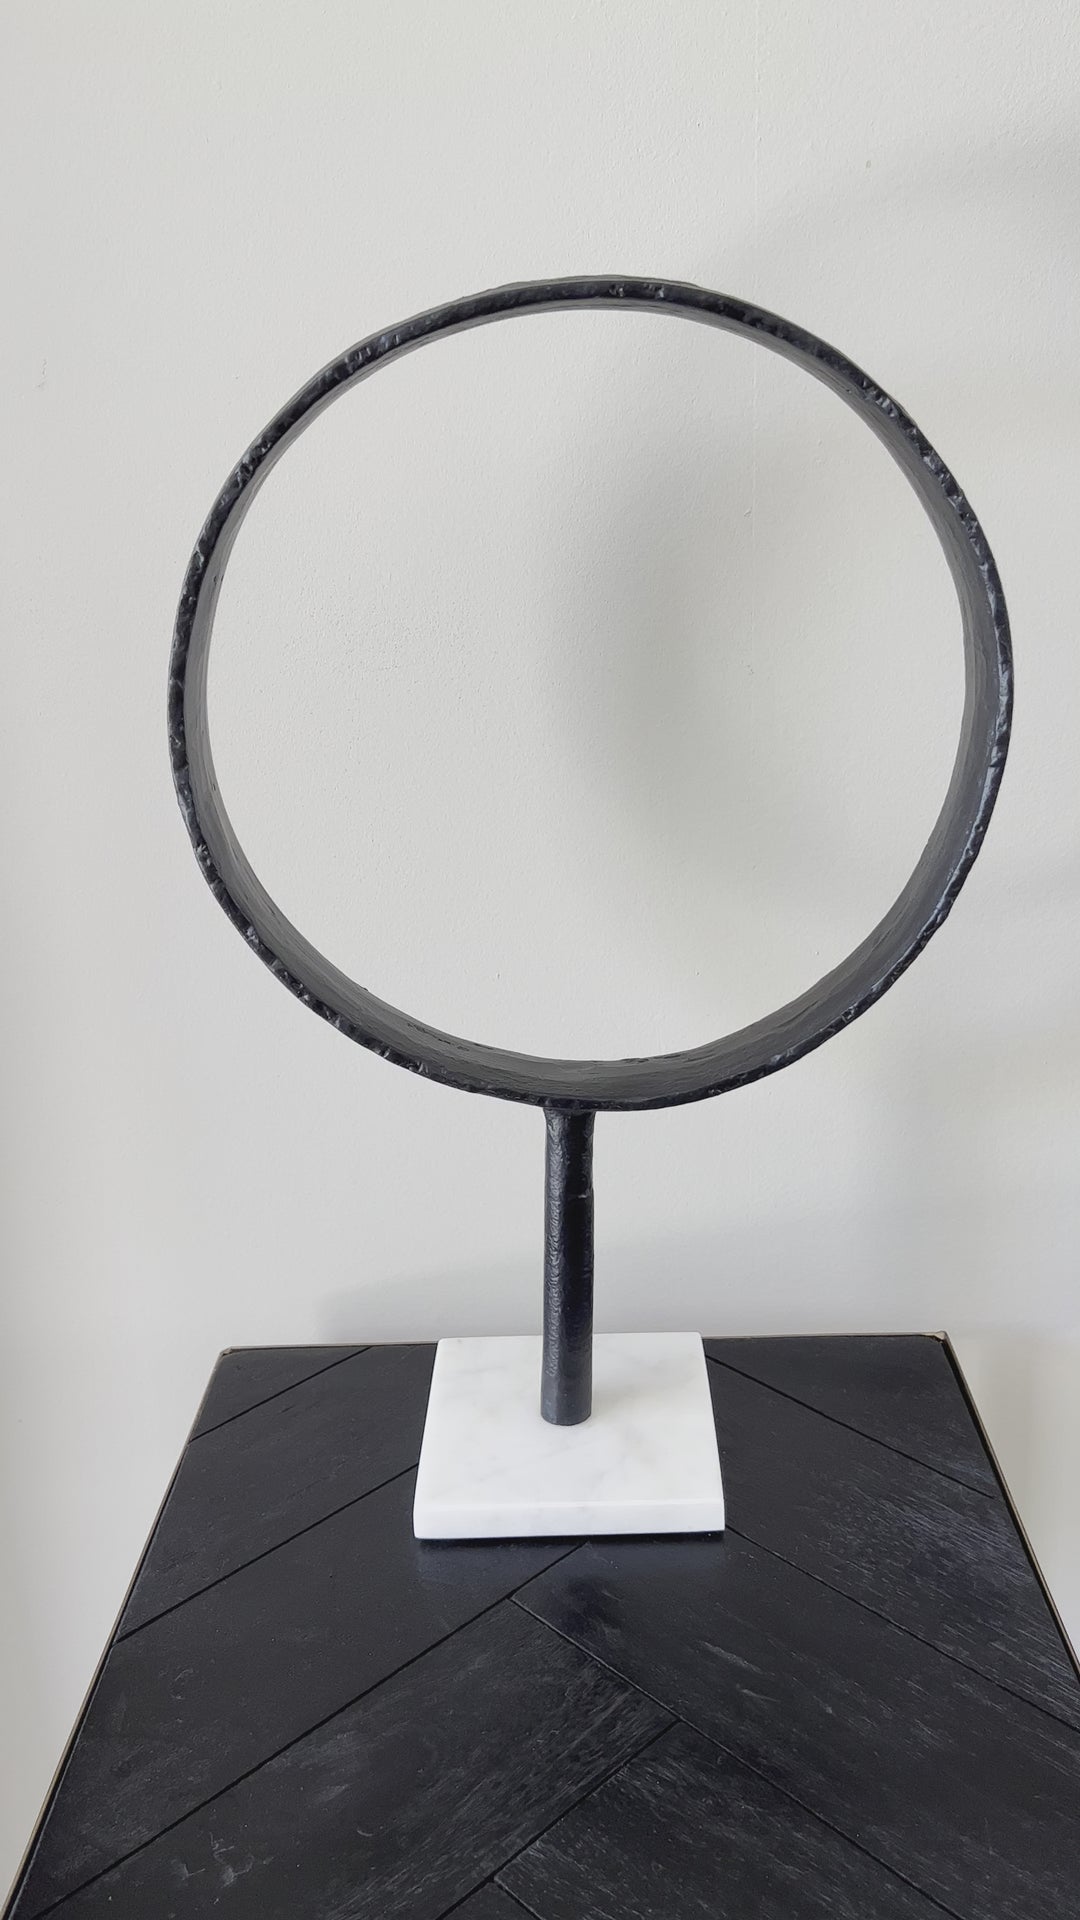 Black metal ring on marble base - black/white - 43 cm high